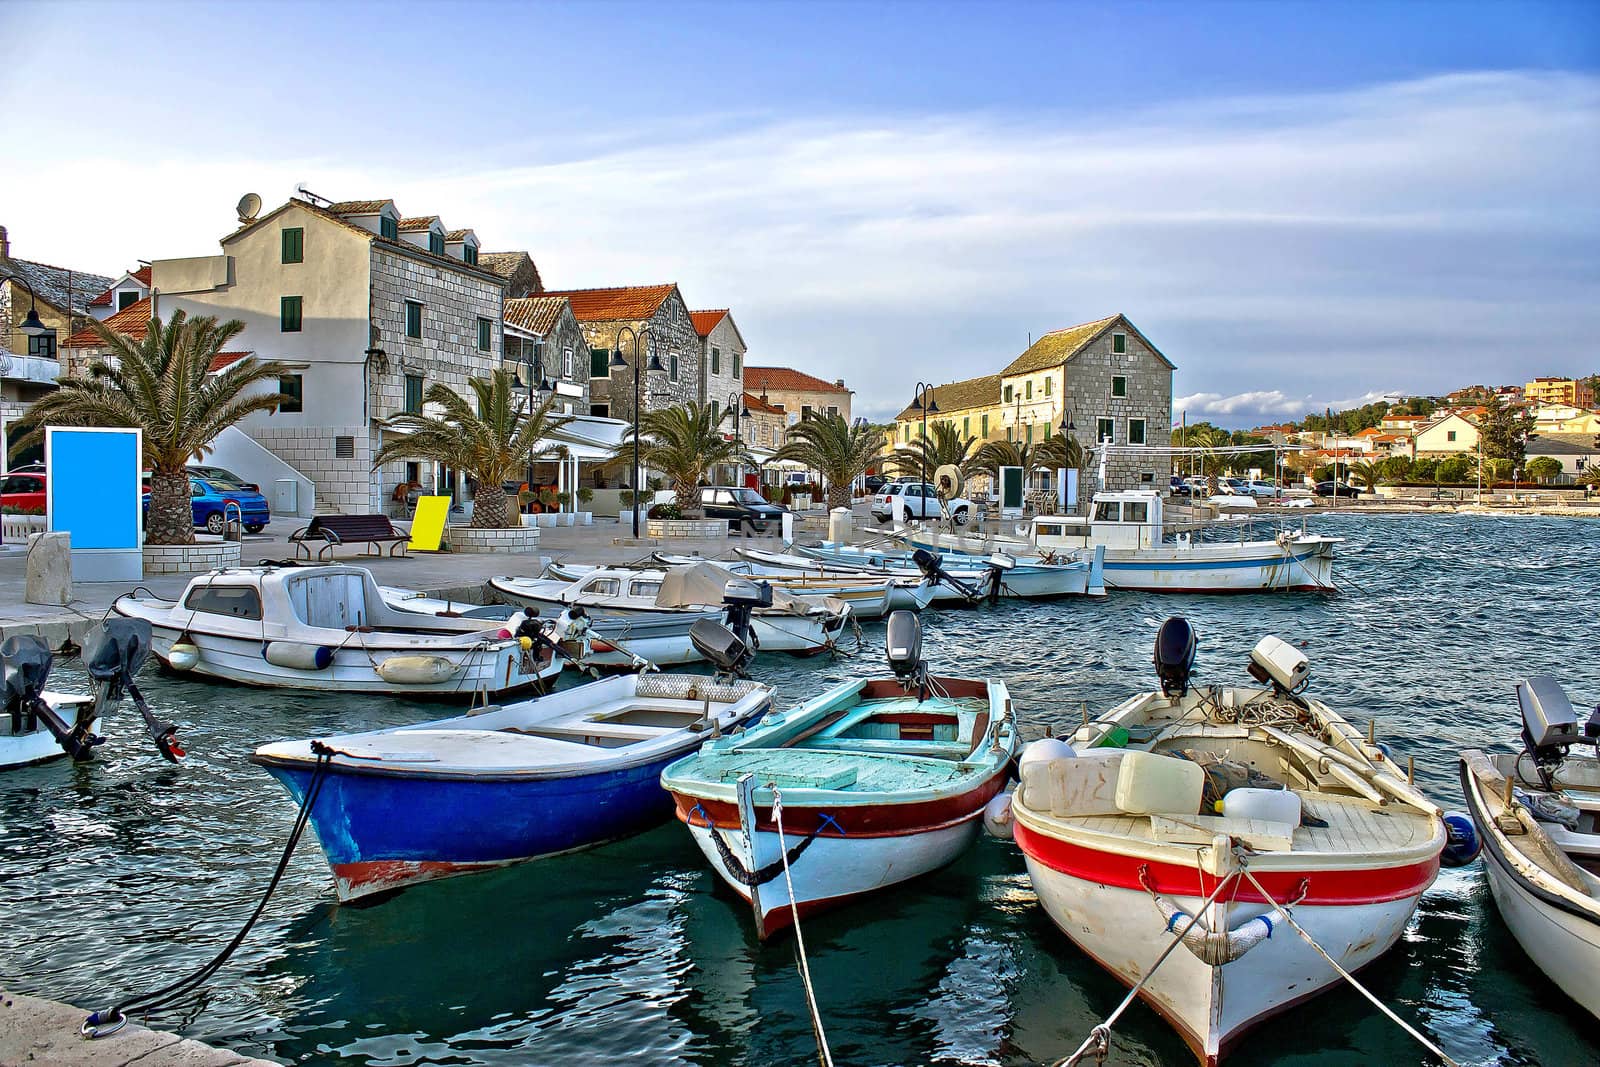 Dalmatian town of Primosten harbor by xbrchx